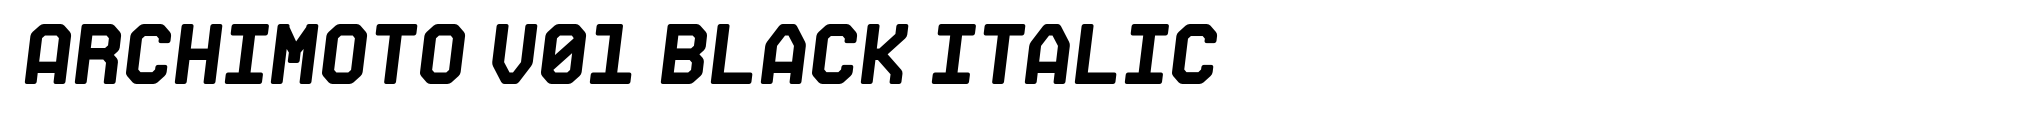 Archimoto V01 Black Italic image